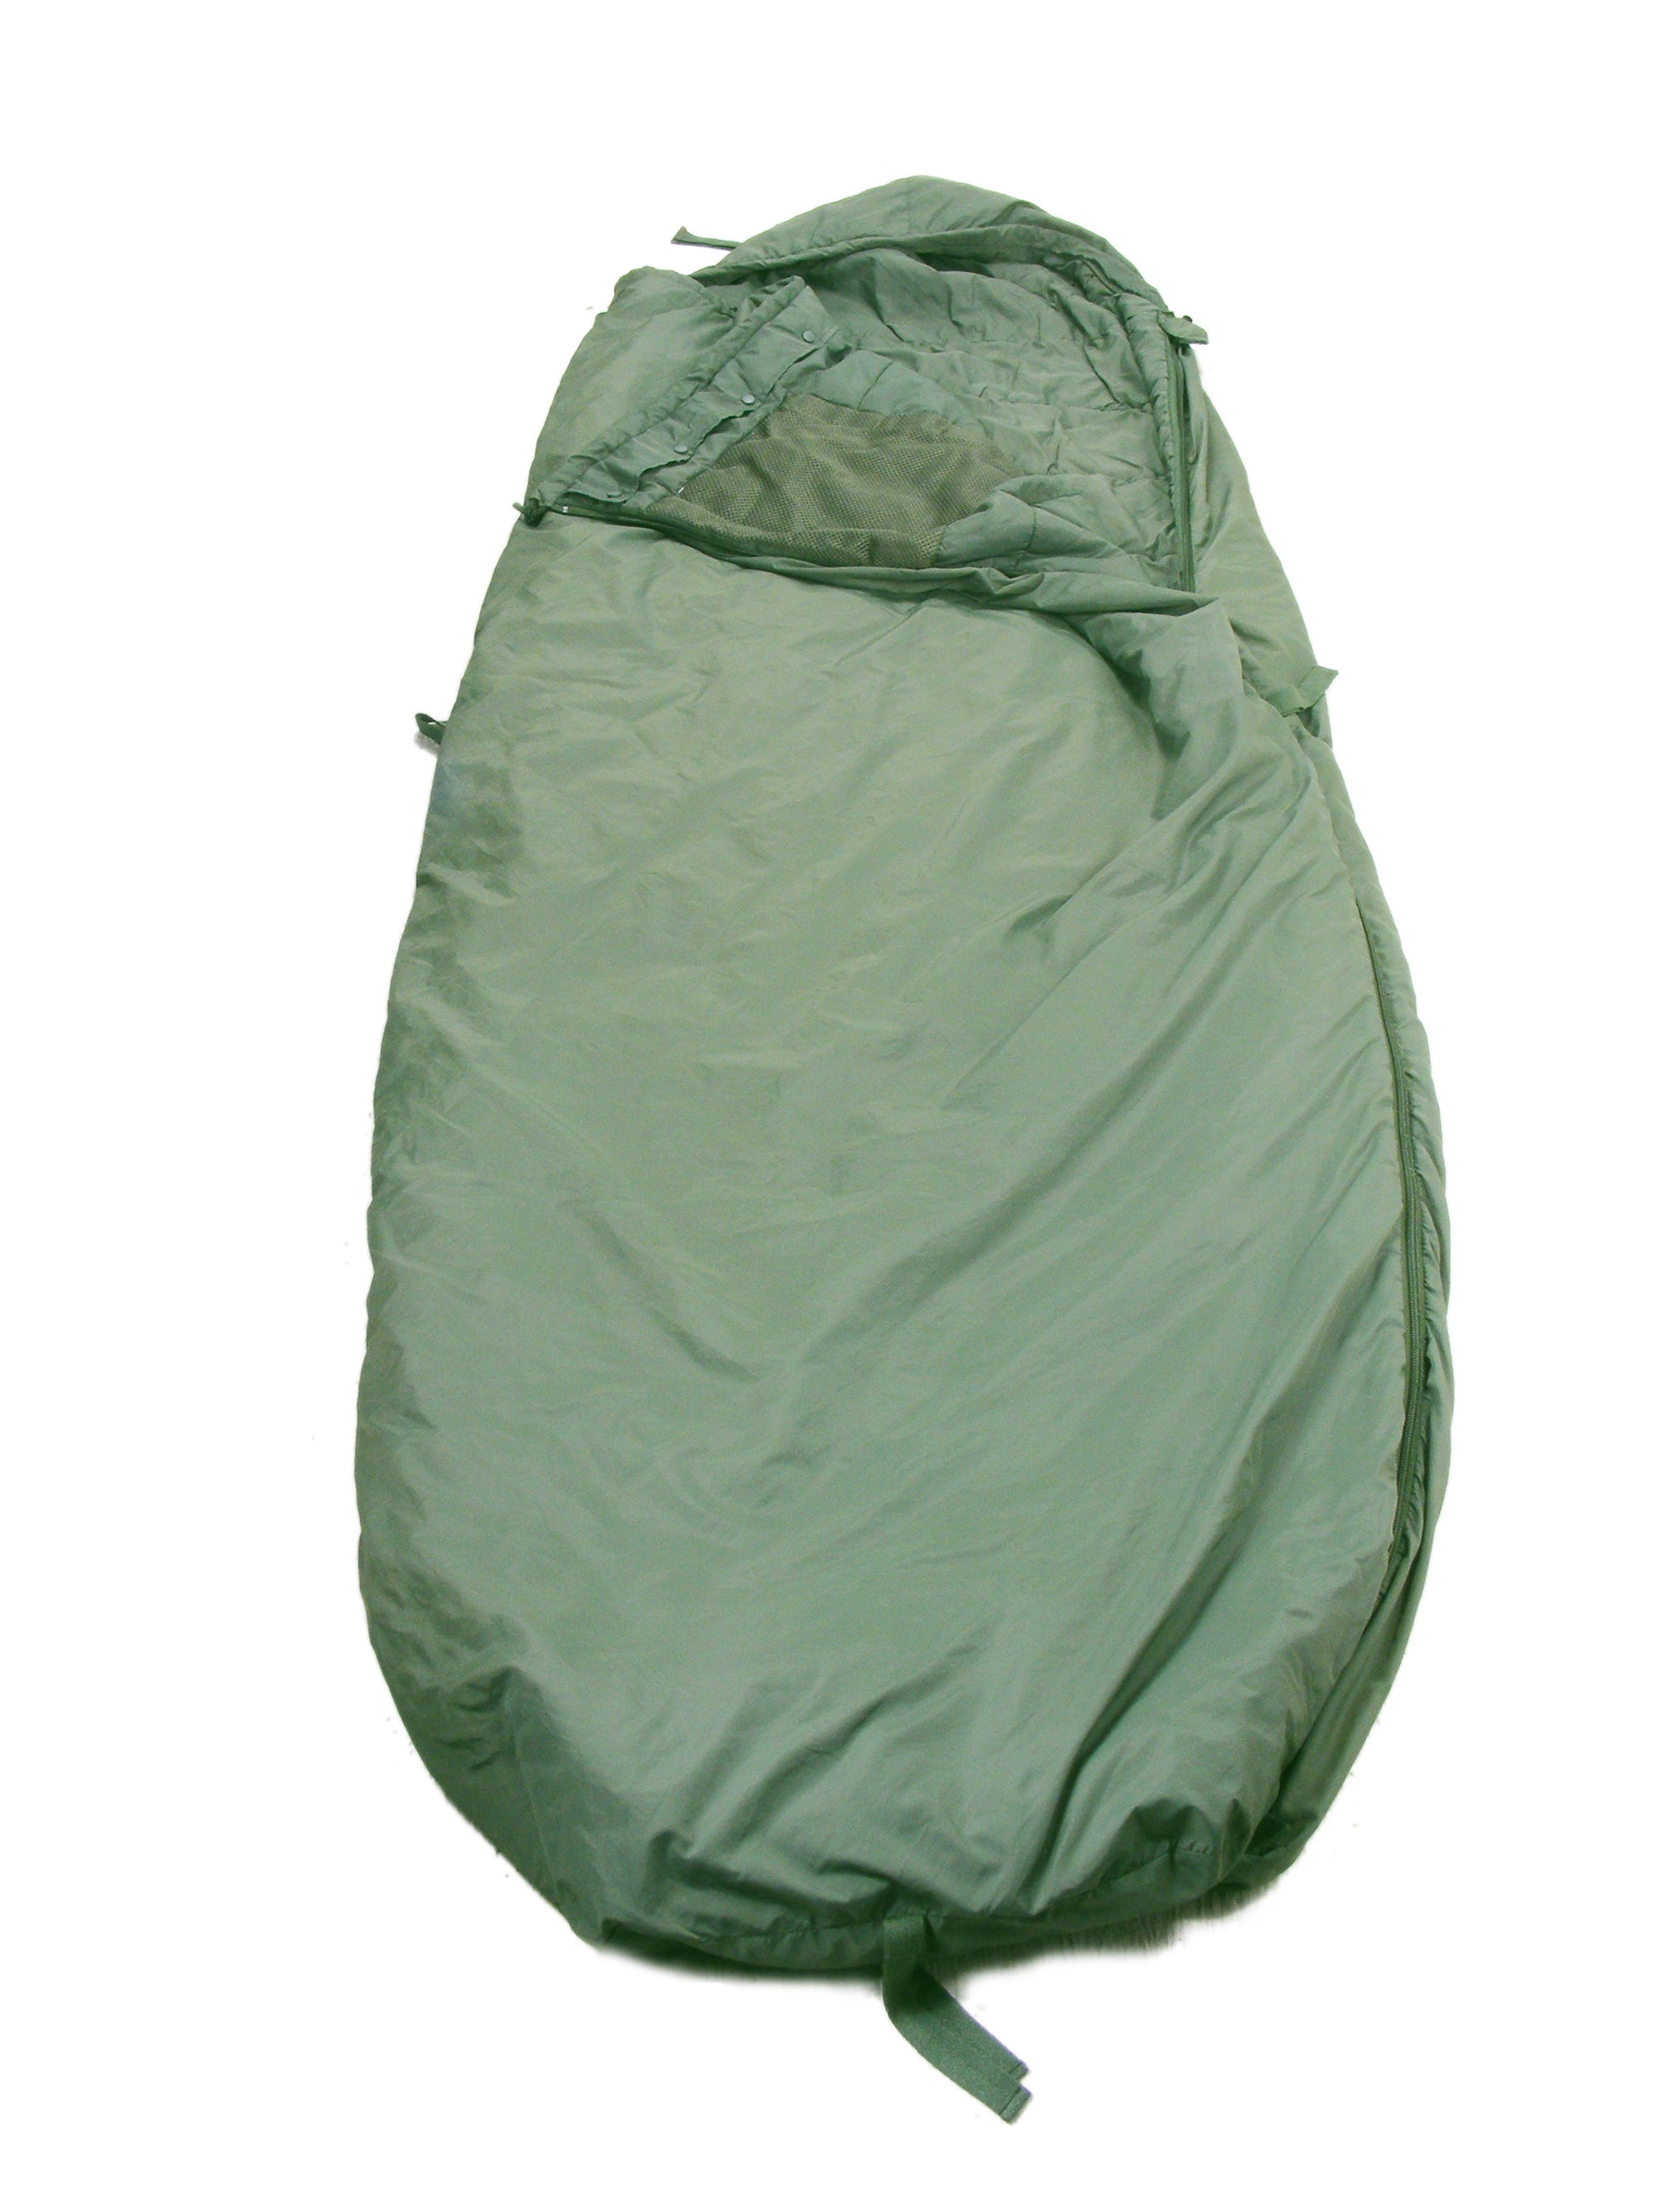 British Army - military Lightweight Sleeping Bag - Modular - Unissued